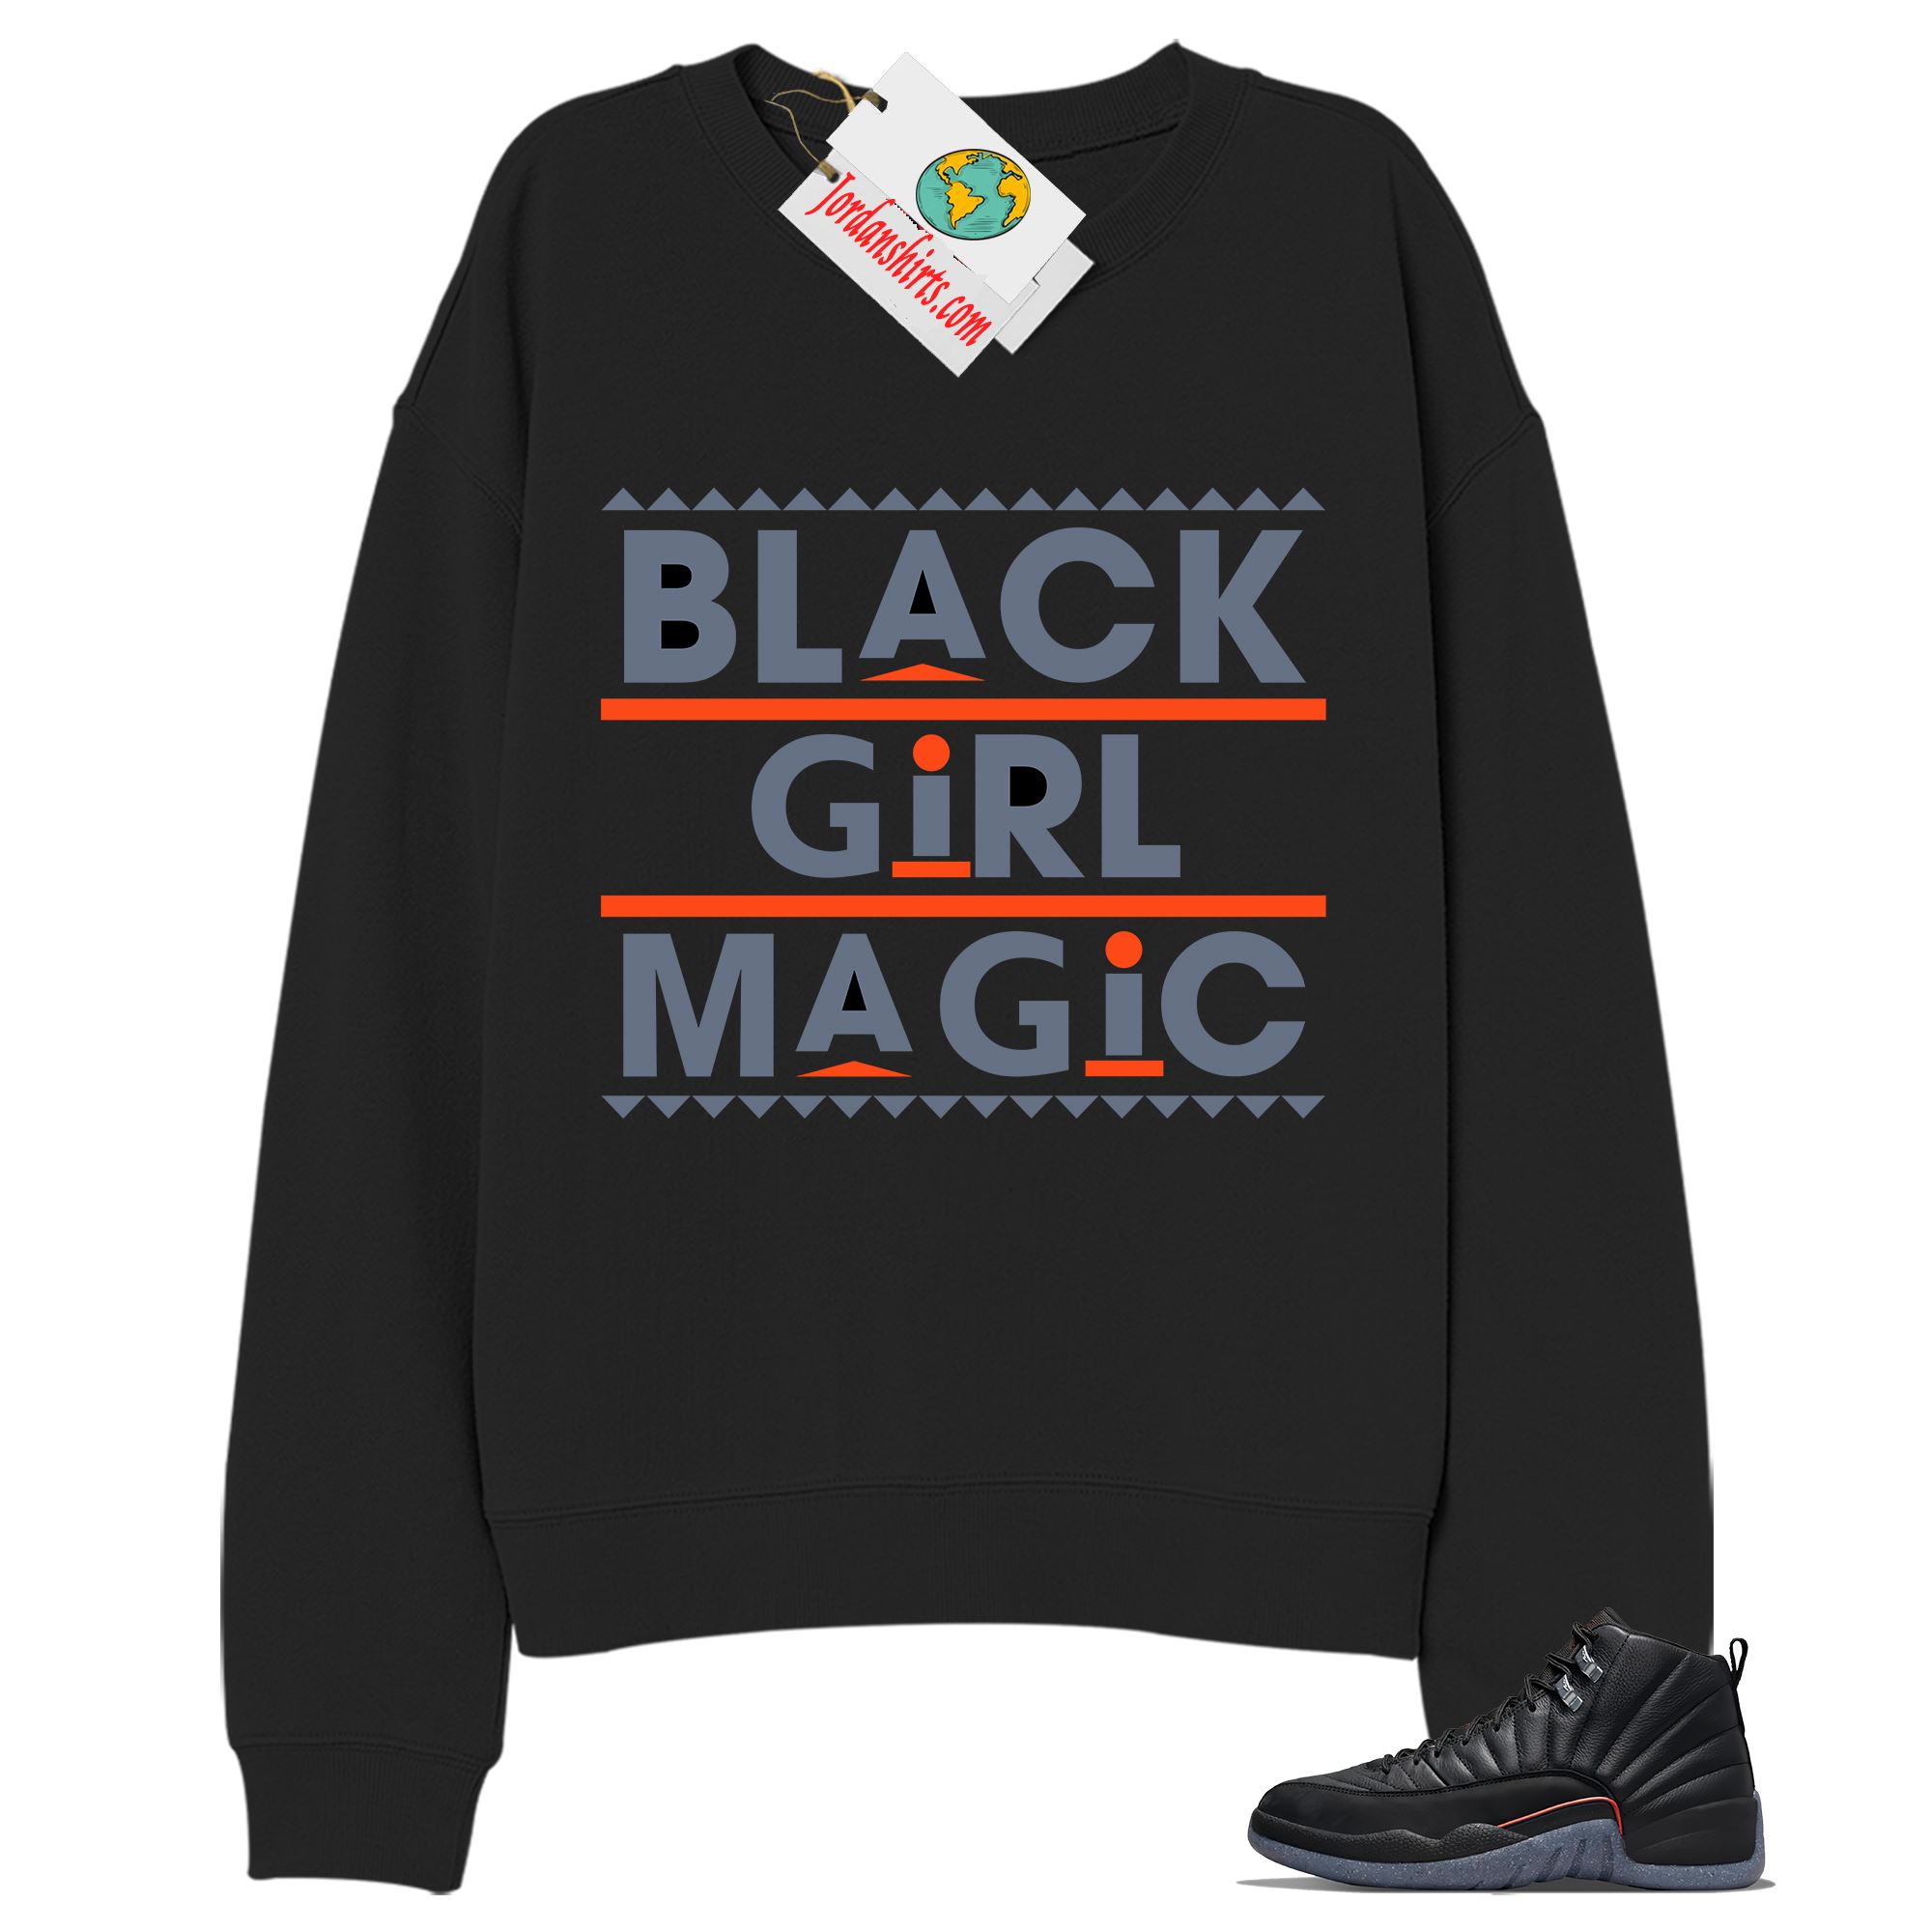 Jordan 12 Sweatshirt, Black Girl Magic Black Sweatshirt Air Jordan 12 Utility Grind 12s Size Up To 5xl